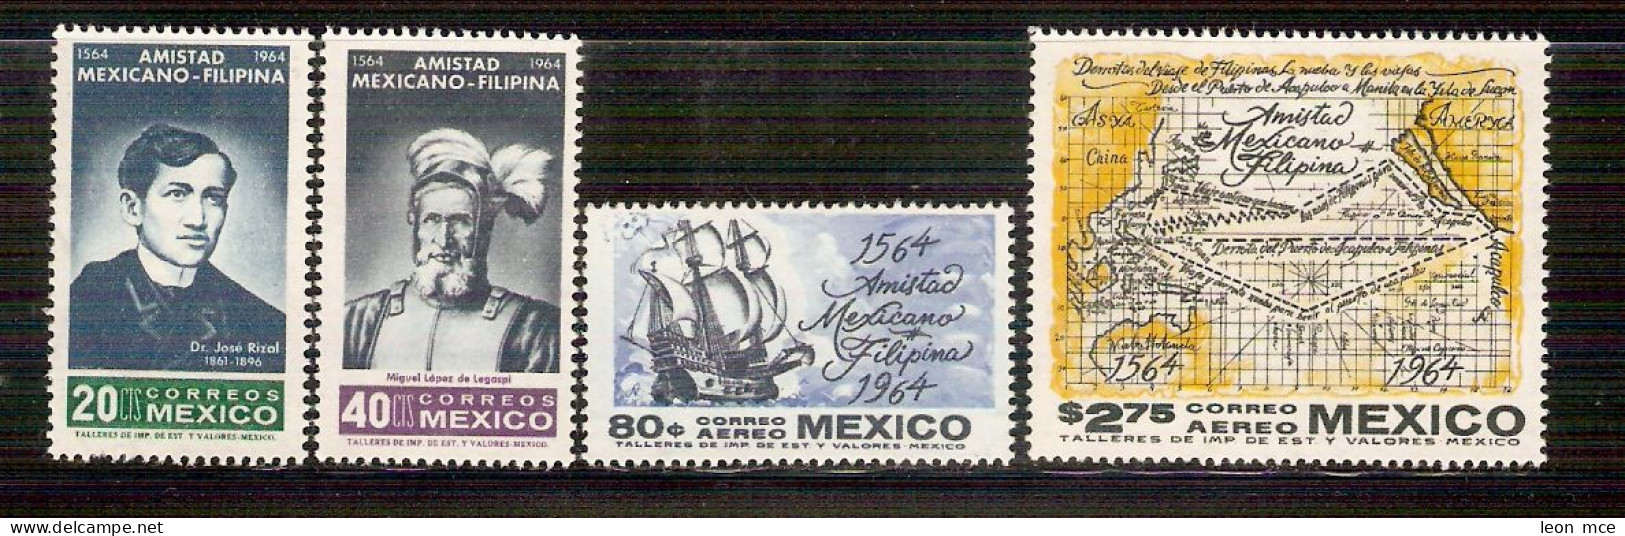 1964 MÉXICO 400 AÑOS AMISTAD MEX. FILIPINAS Sc. 956-957, C300-C301 (4) MNH. 400 YEARS OF MEXICO-PHILIPPINES FRIENDSHIP - Mexique